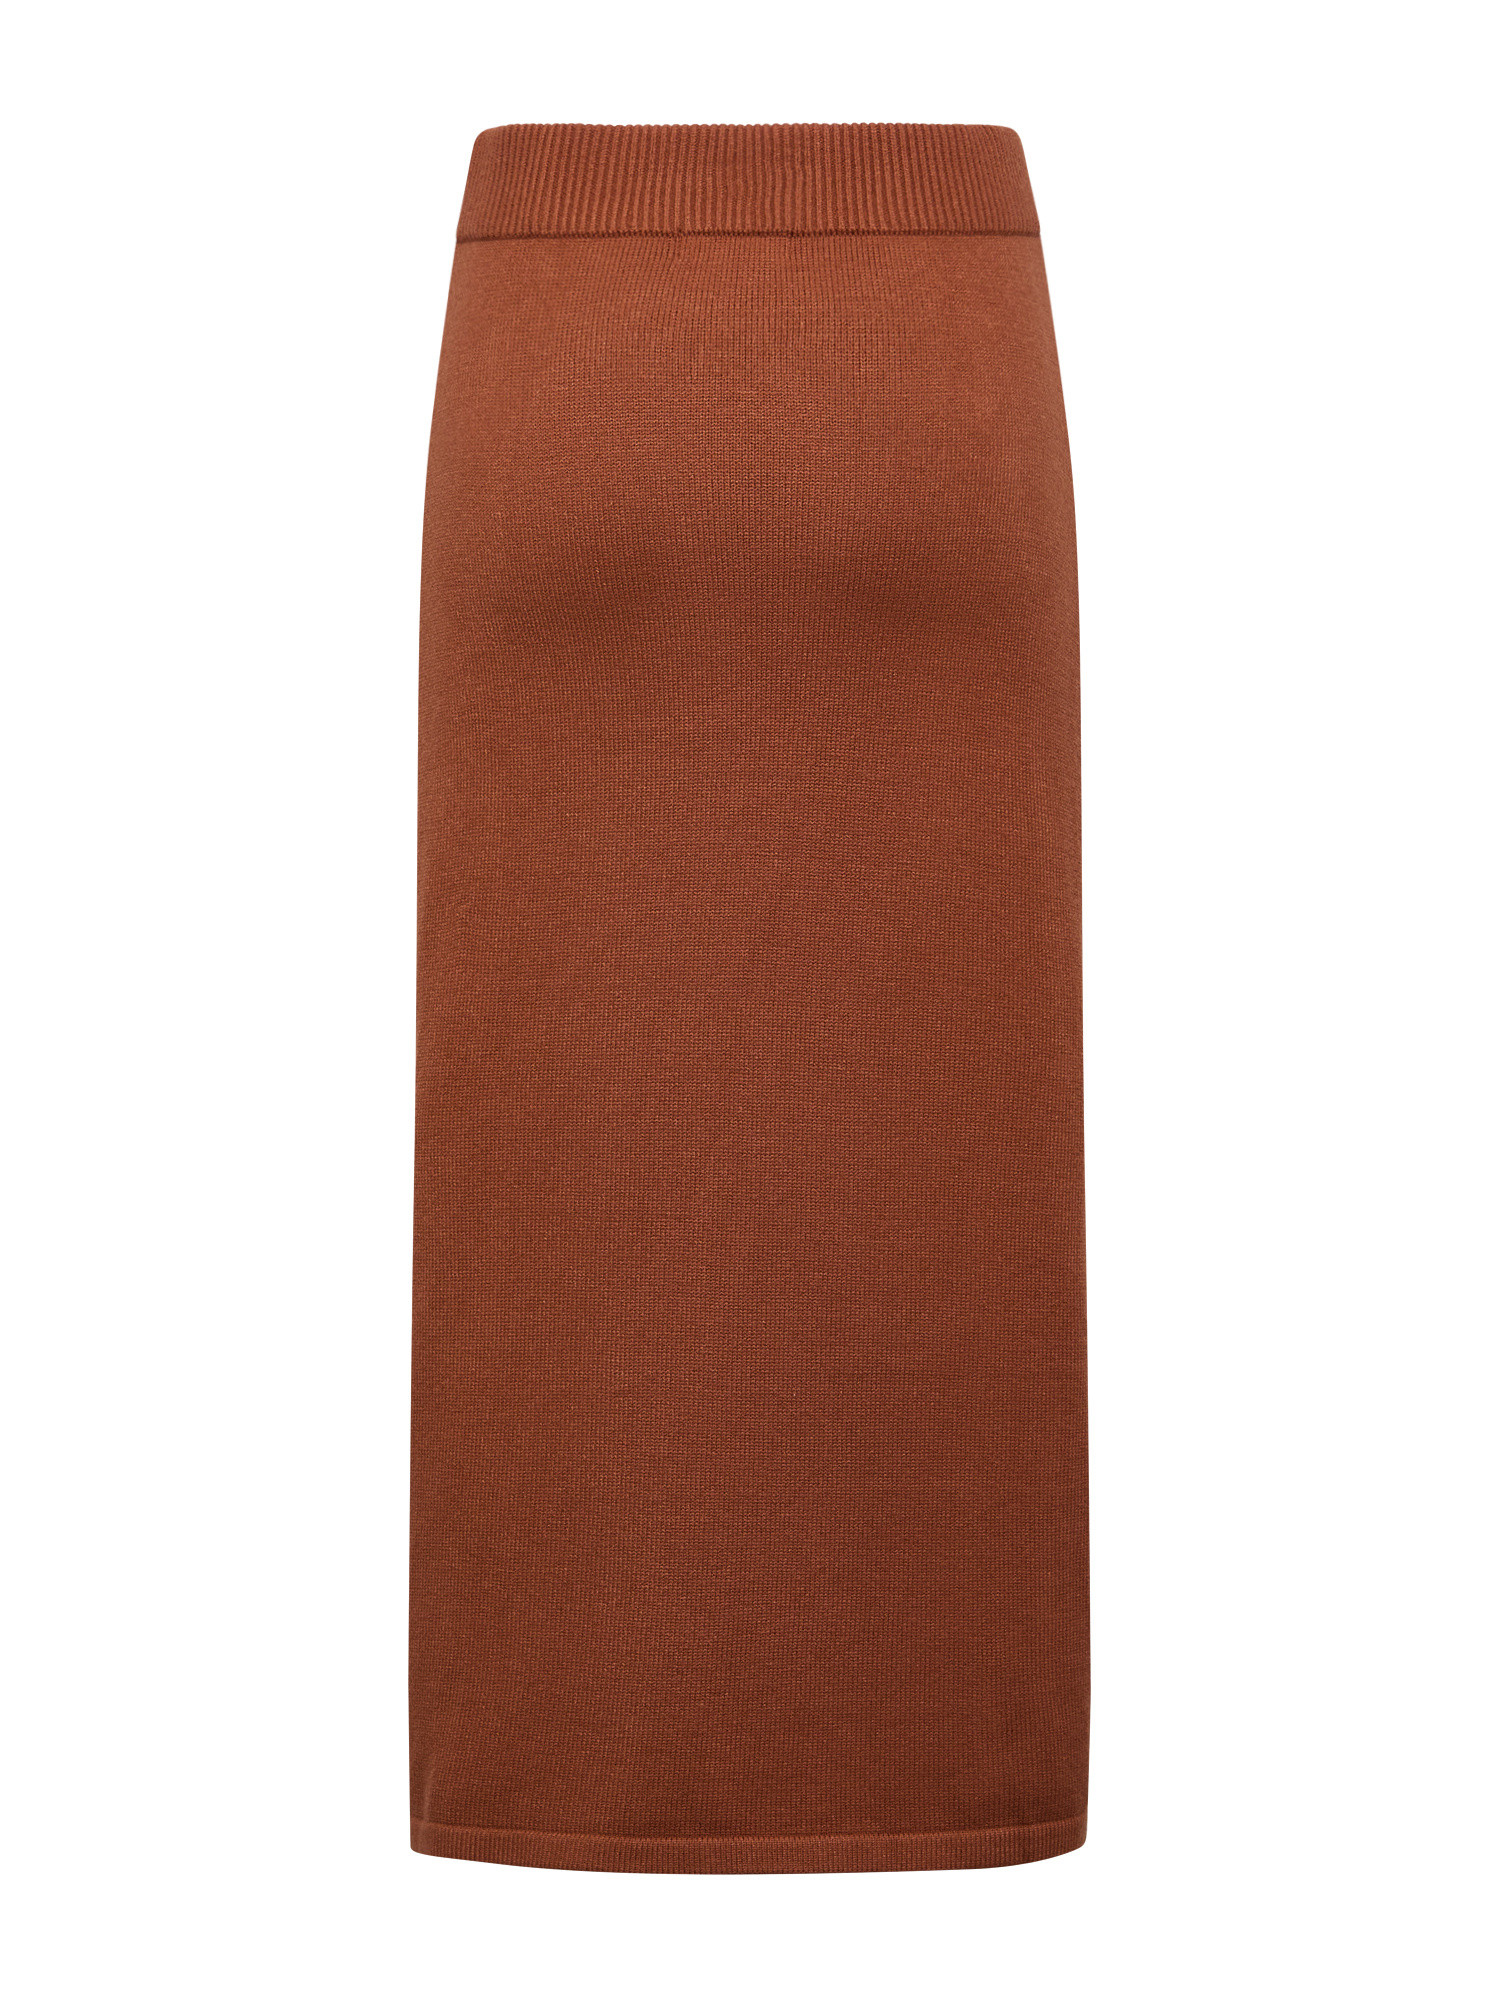 Koan - Knitted midi skirt, Brown, large image number 1